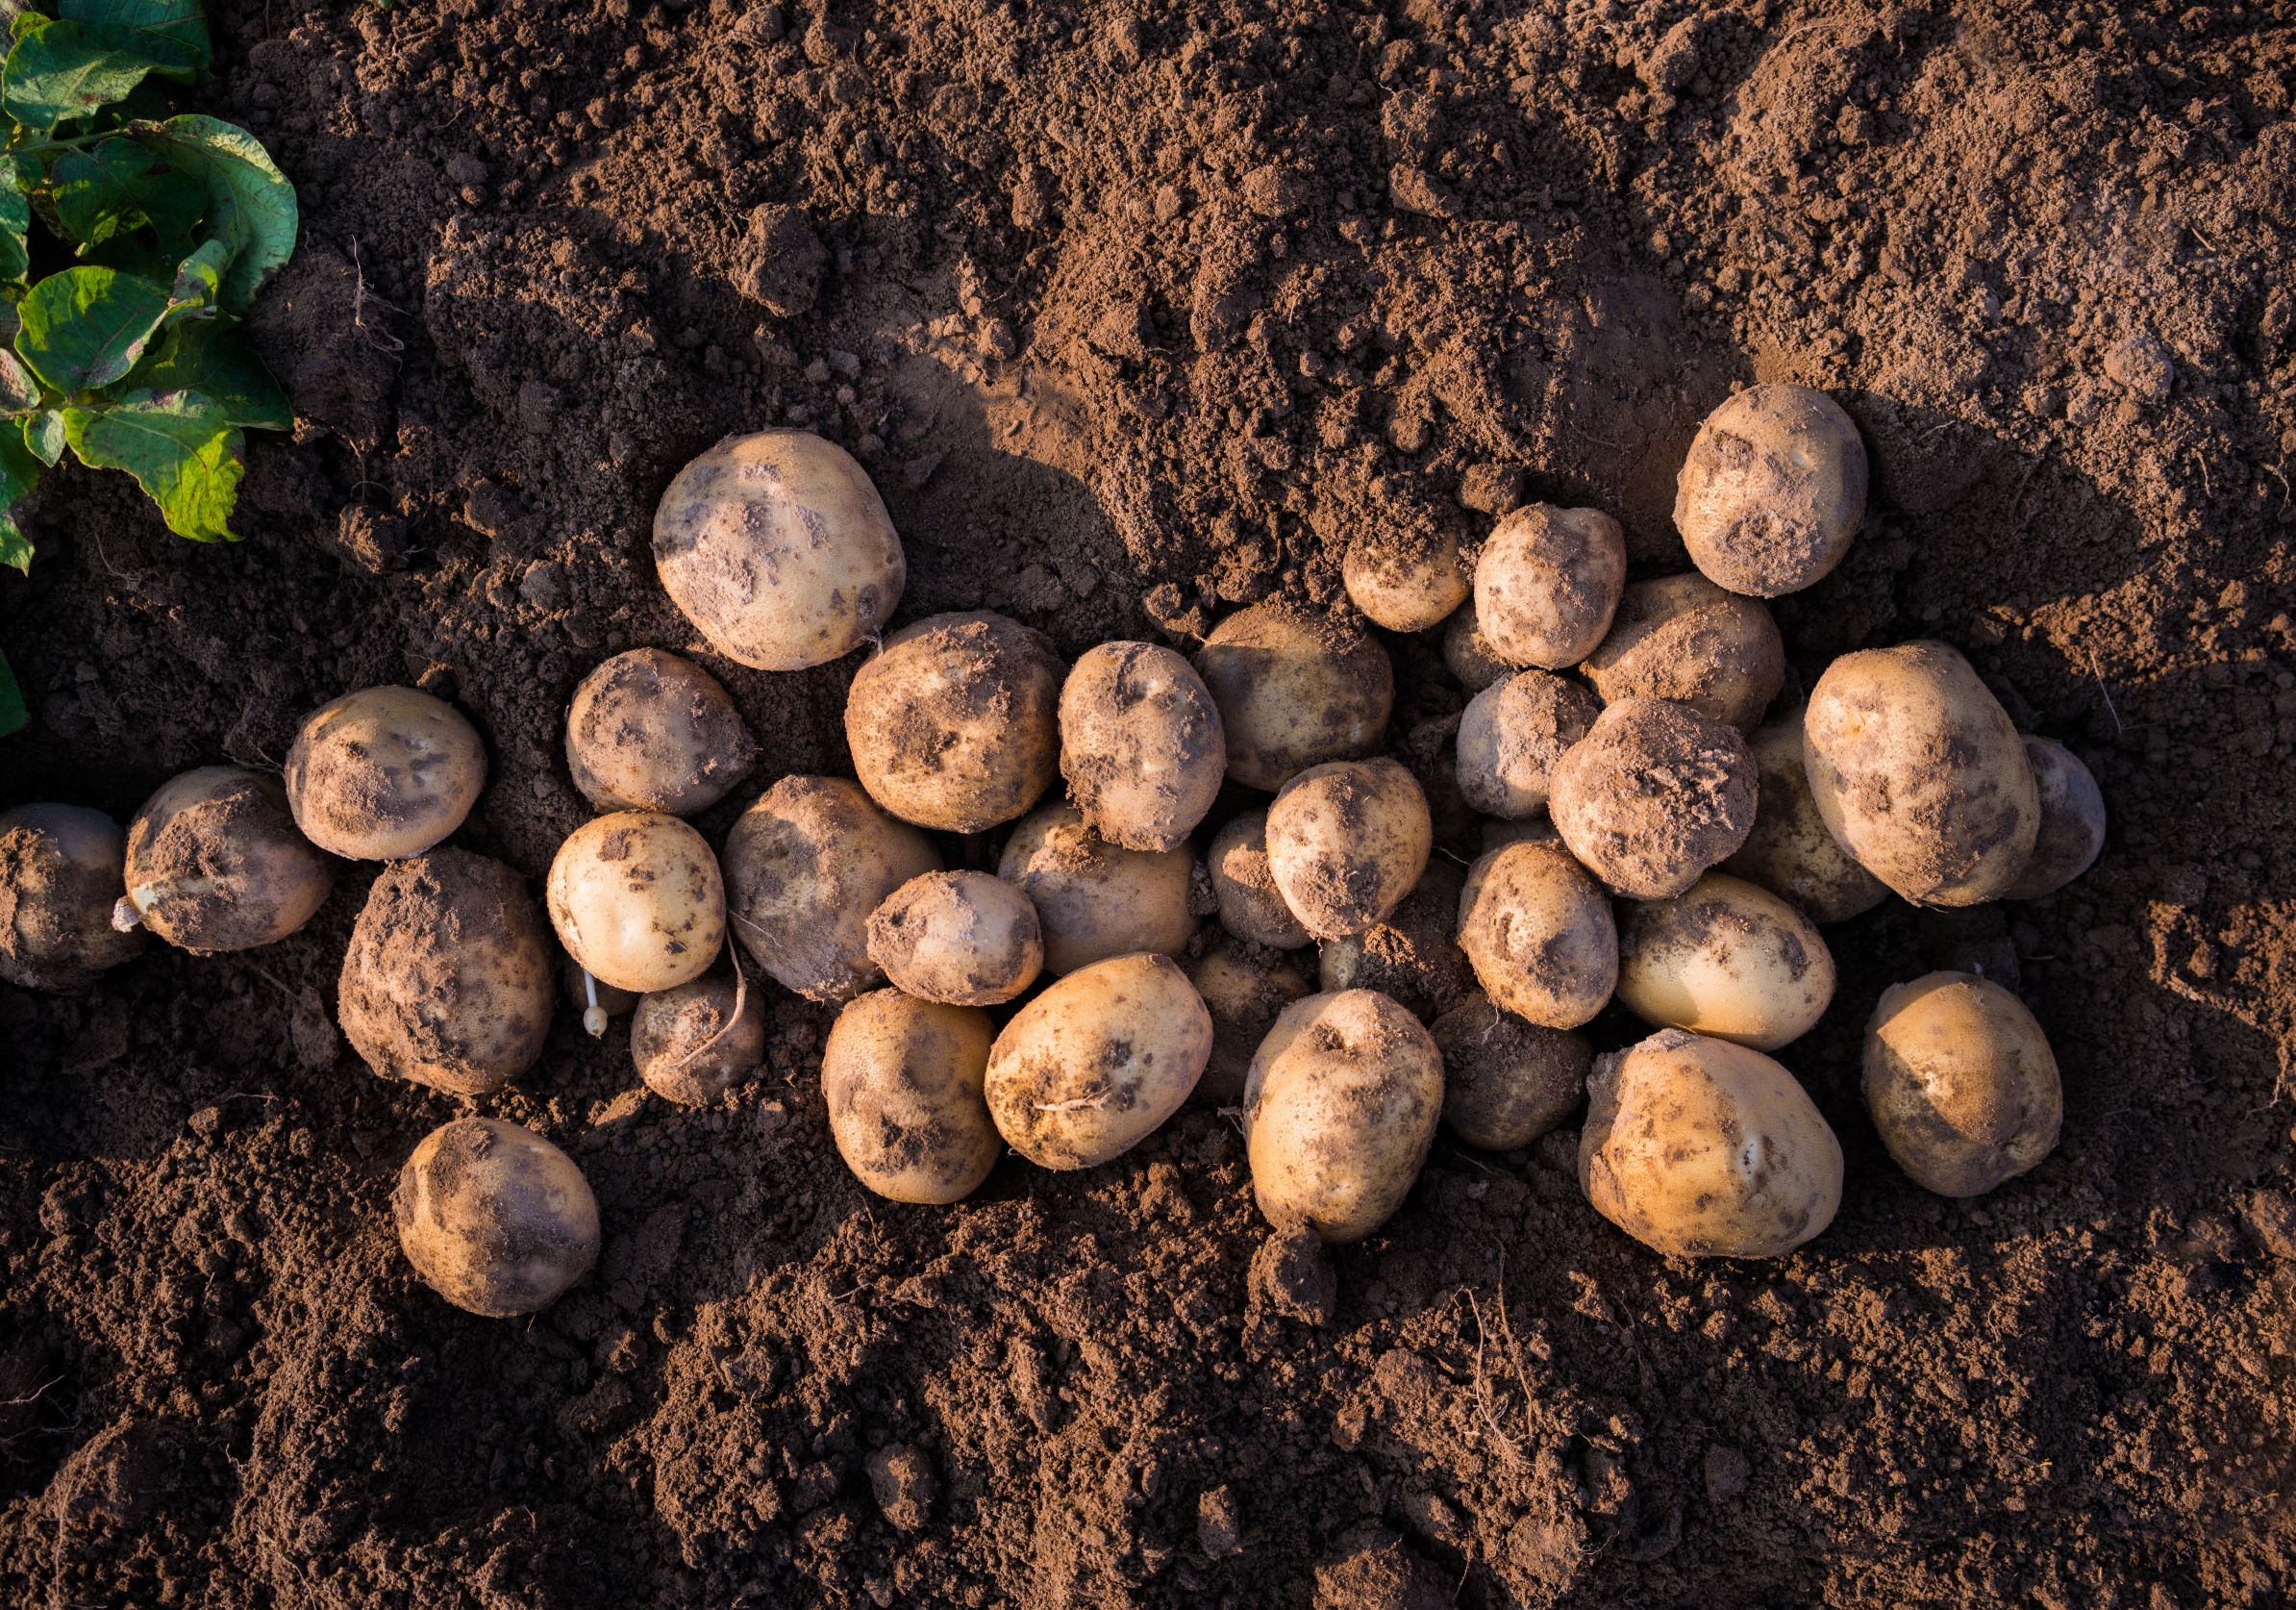 Harvesting potatoes in September